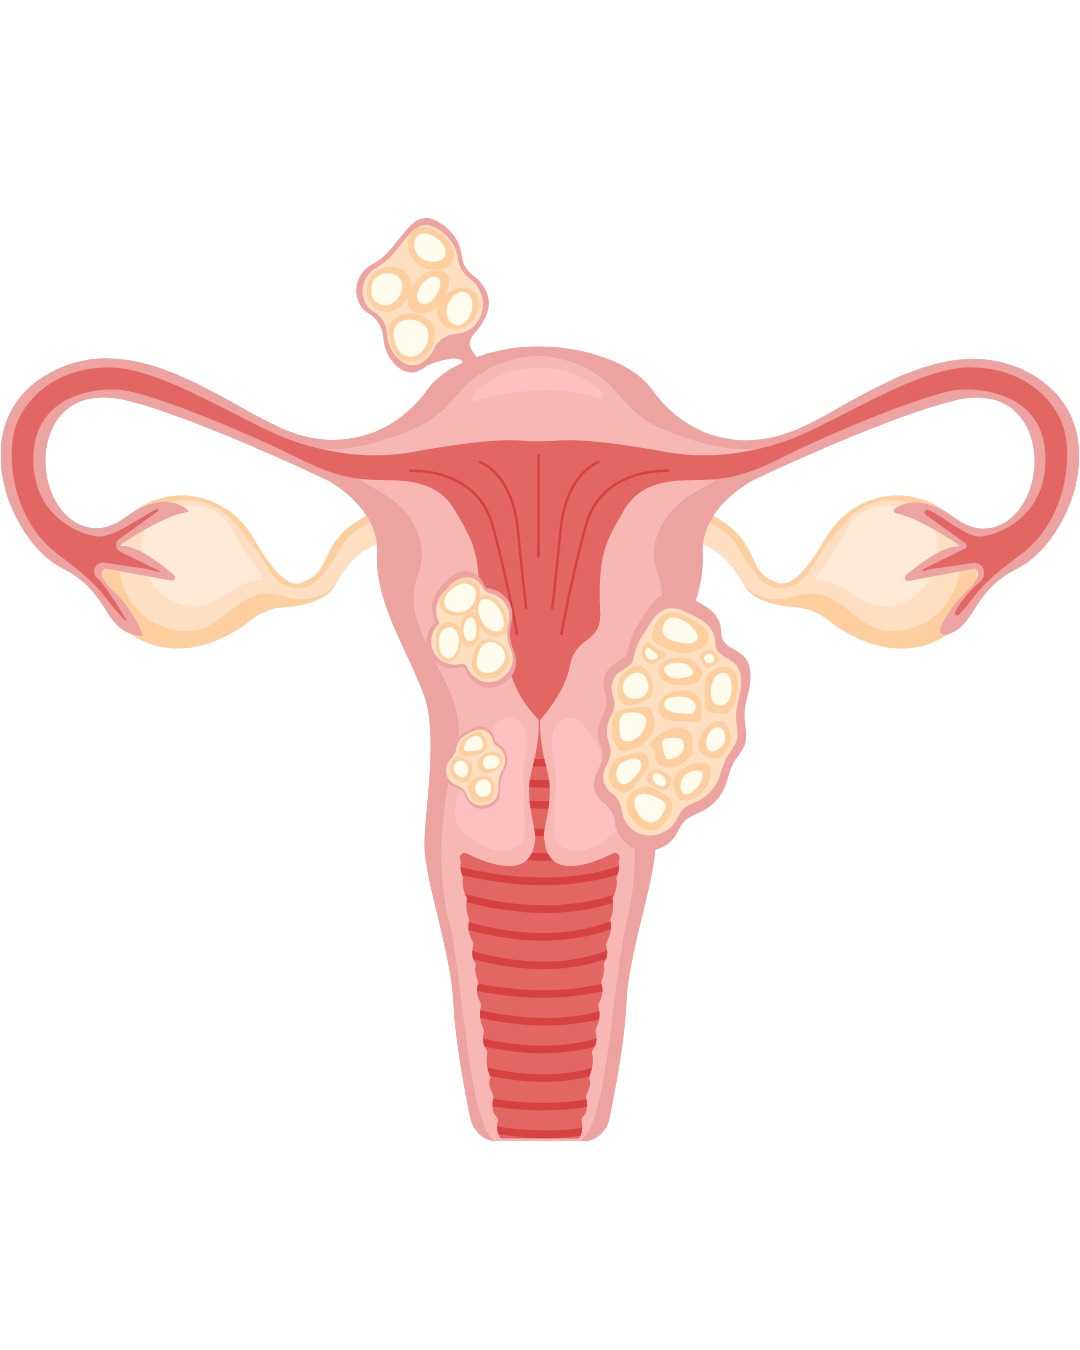 How Do Fibroids Affect Pregnancy and Fertility?